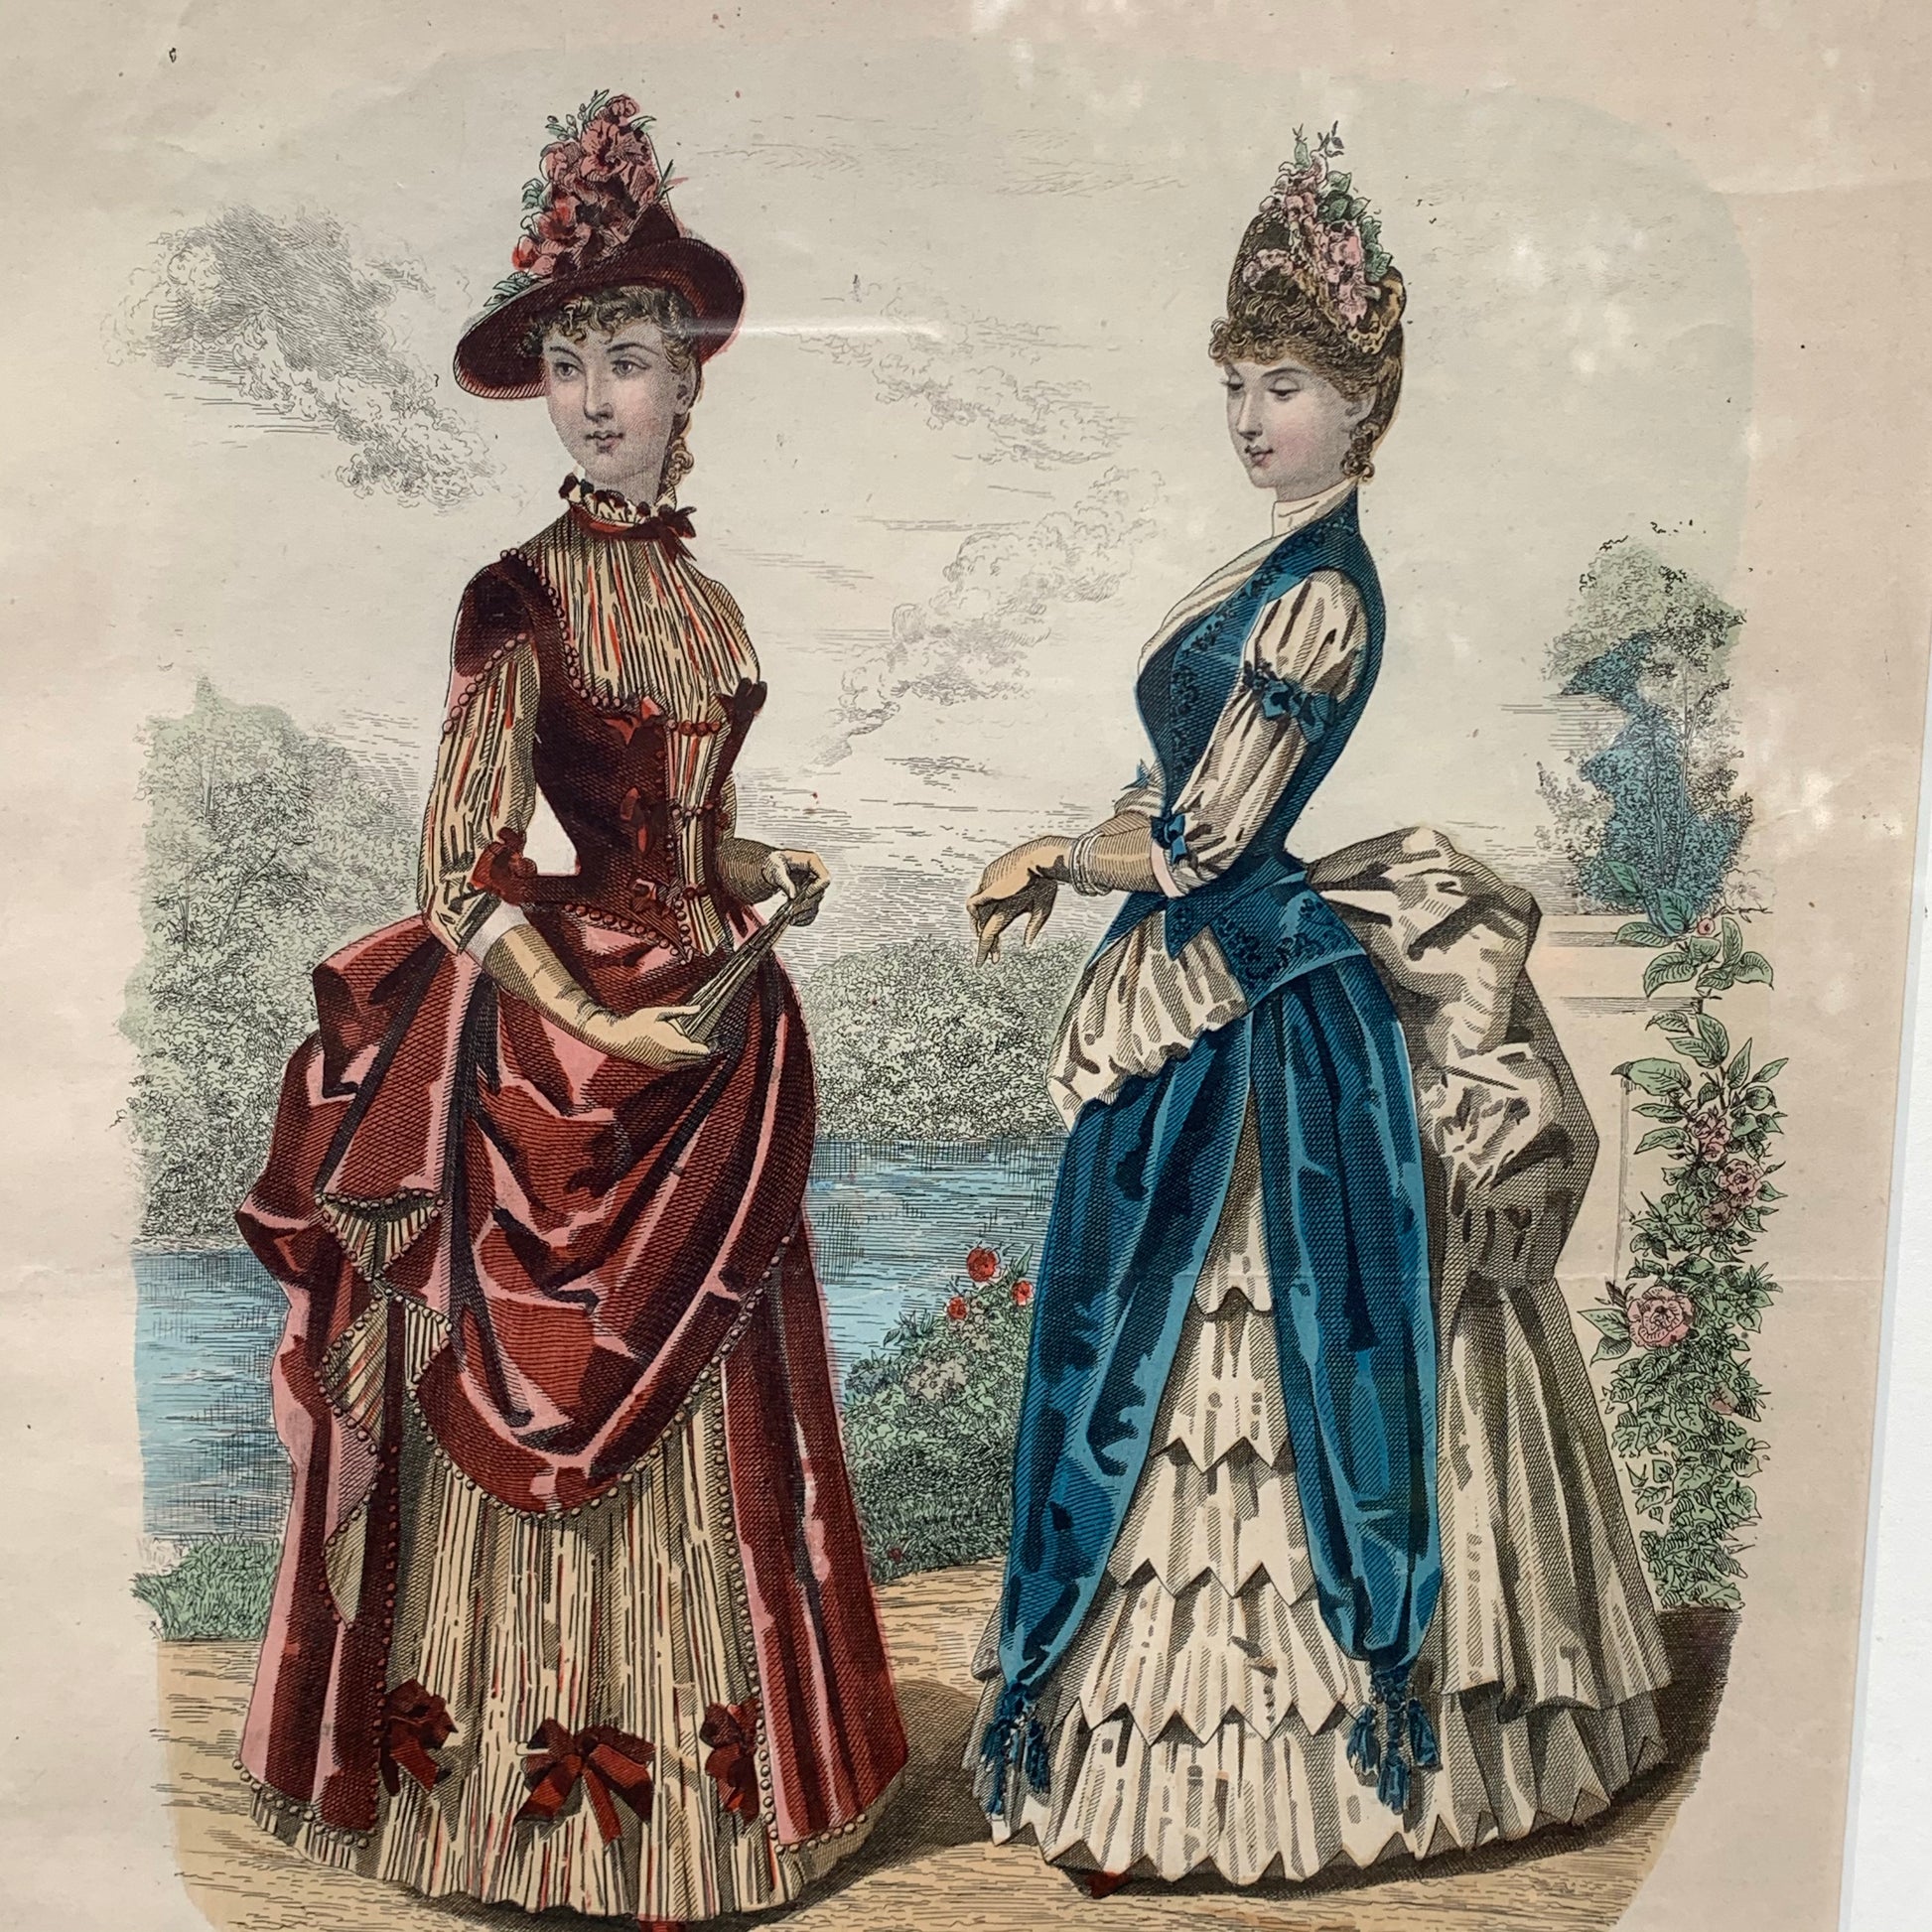 Antique 1886 La Mode Illustree French Fashion Print